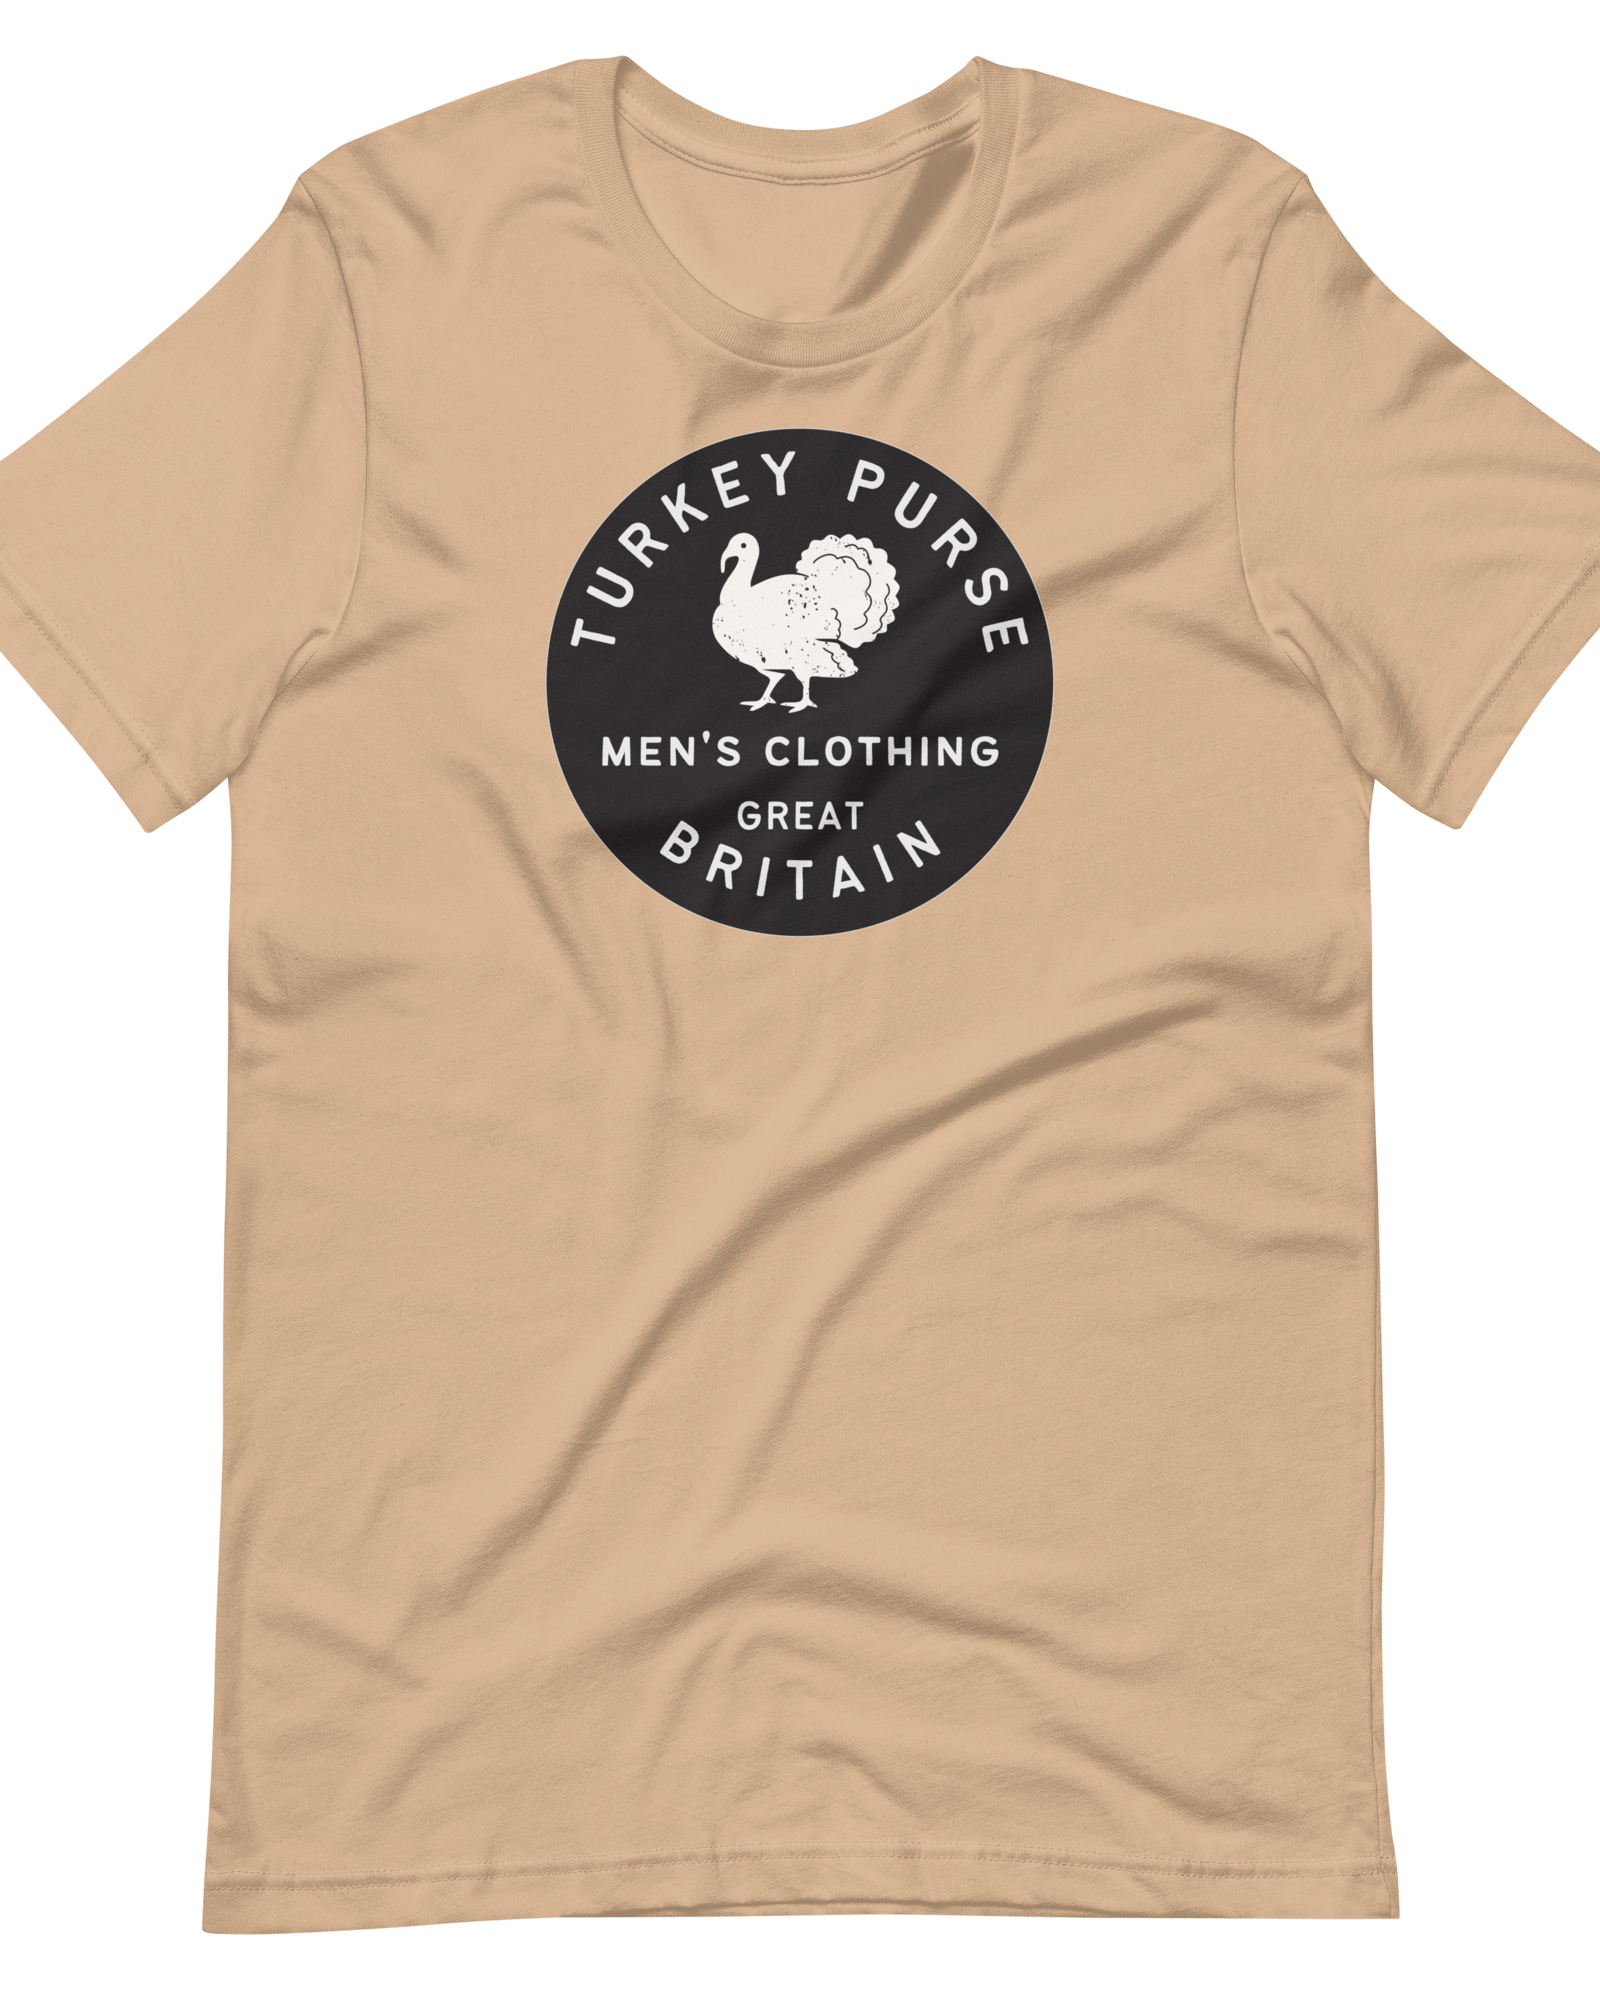 Turkey Purse Men's Clothing T-shirt Tan / S Jolly & Goode